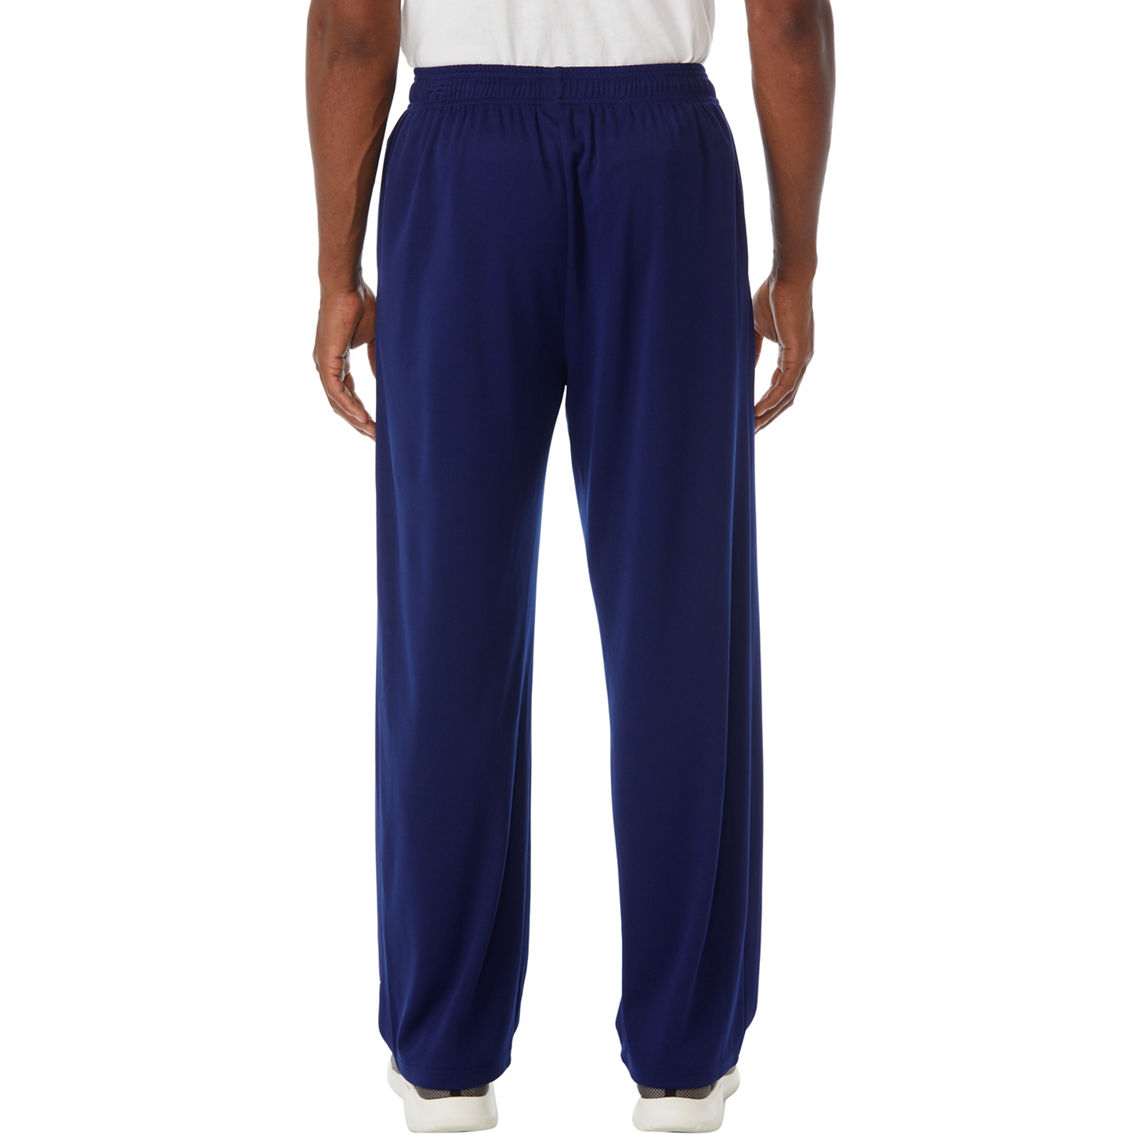 PBX Pro Polyester Pants - Image 2 of 3